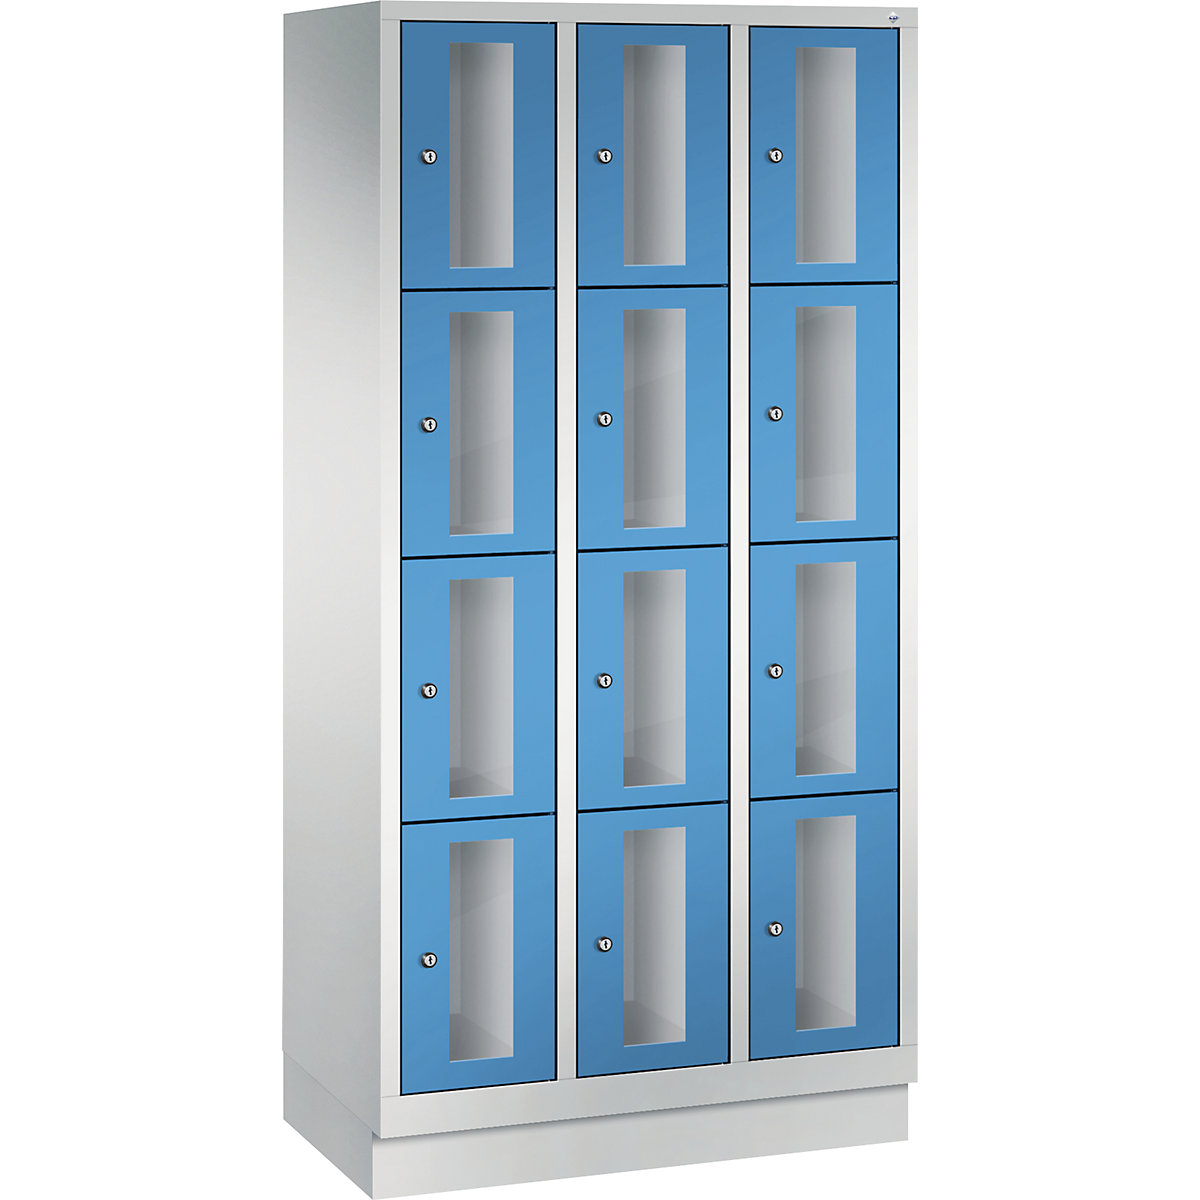 C+P – Armario de compartimentos CLASSIC, altura de compartimento 375 mm, con zócalo, 12 compartimentos, 900 mm de anchura, puerta en azul luminoso